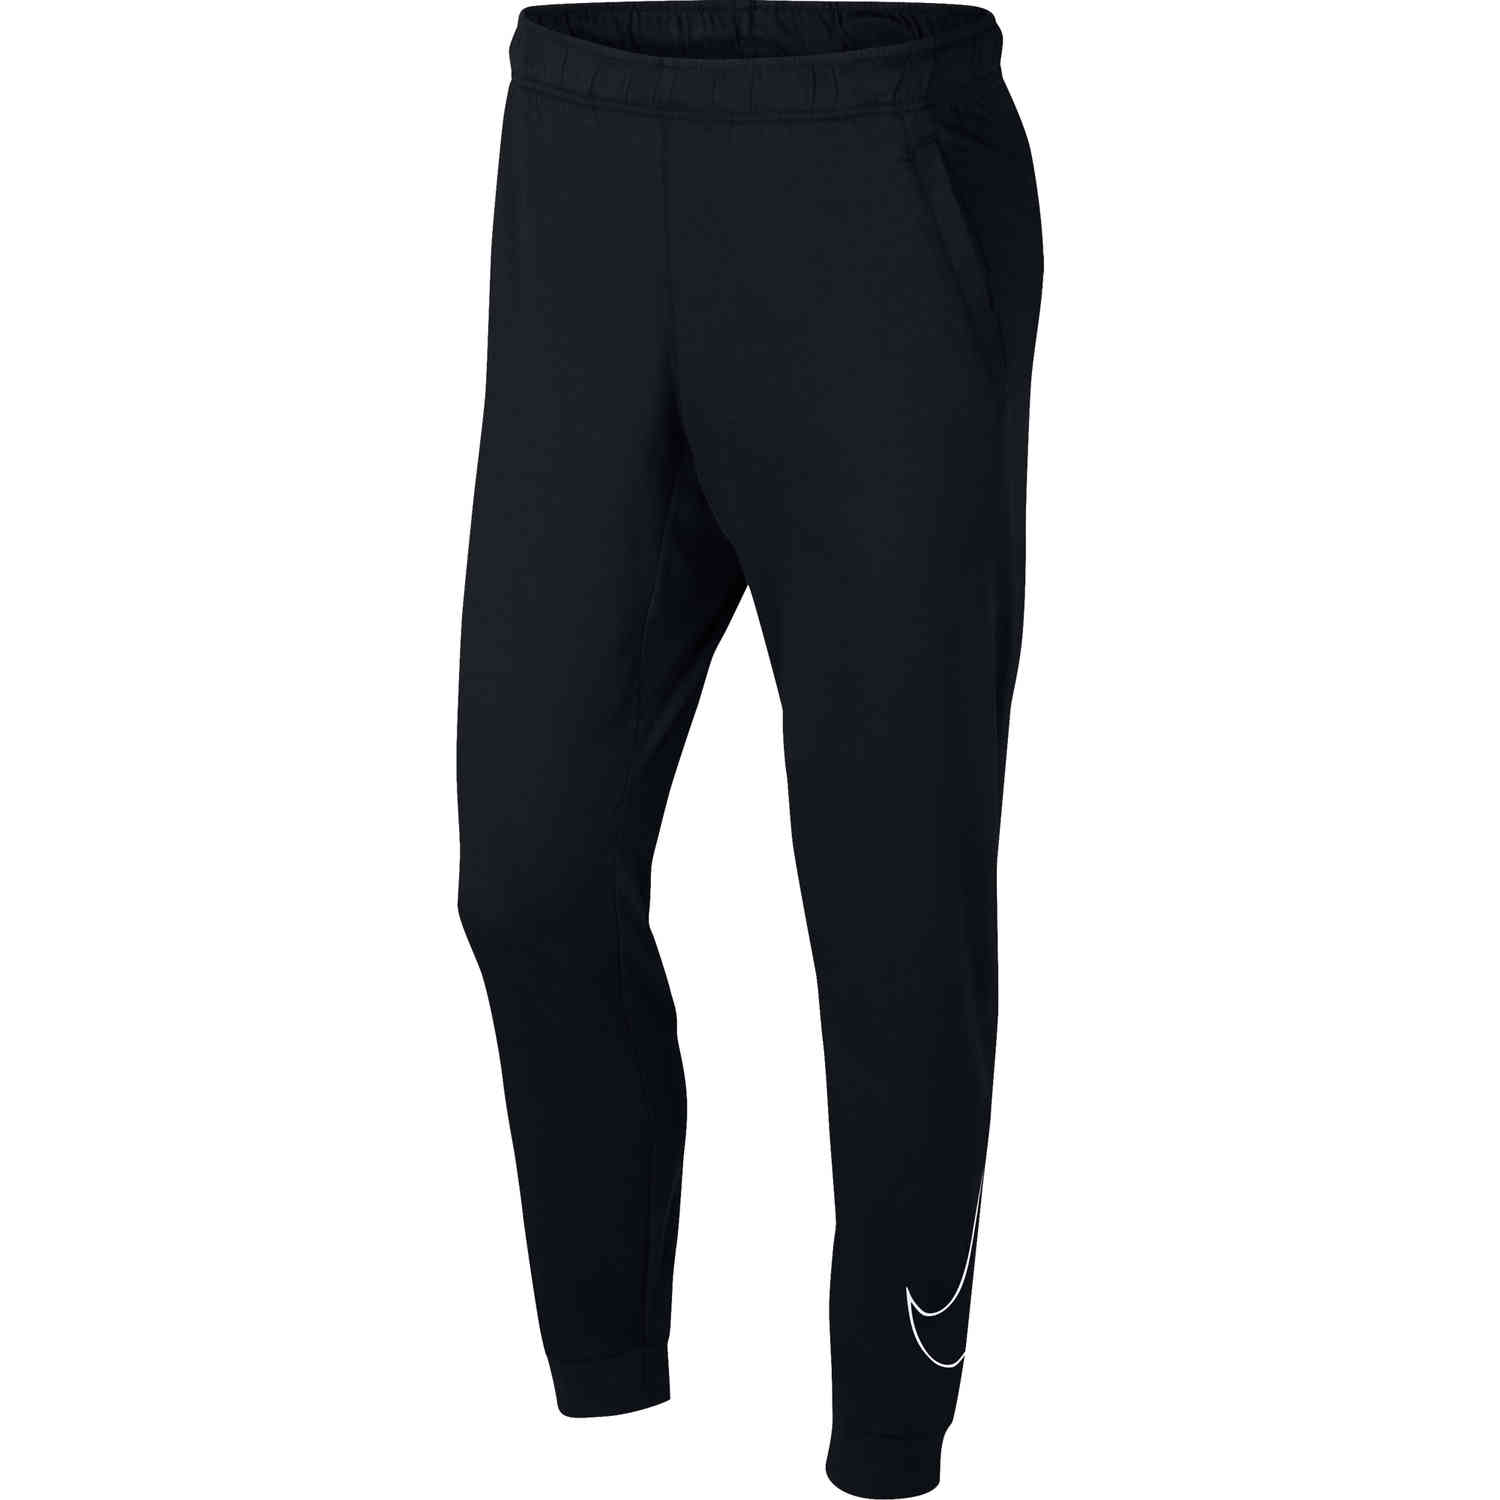 Nike Dri-FIT Cotton Pants - Black 